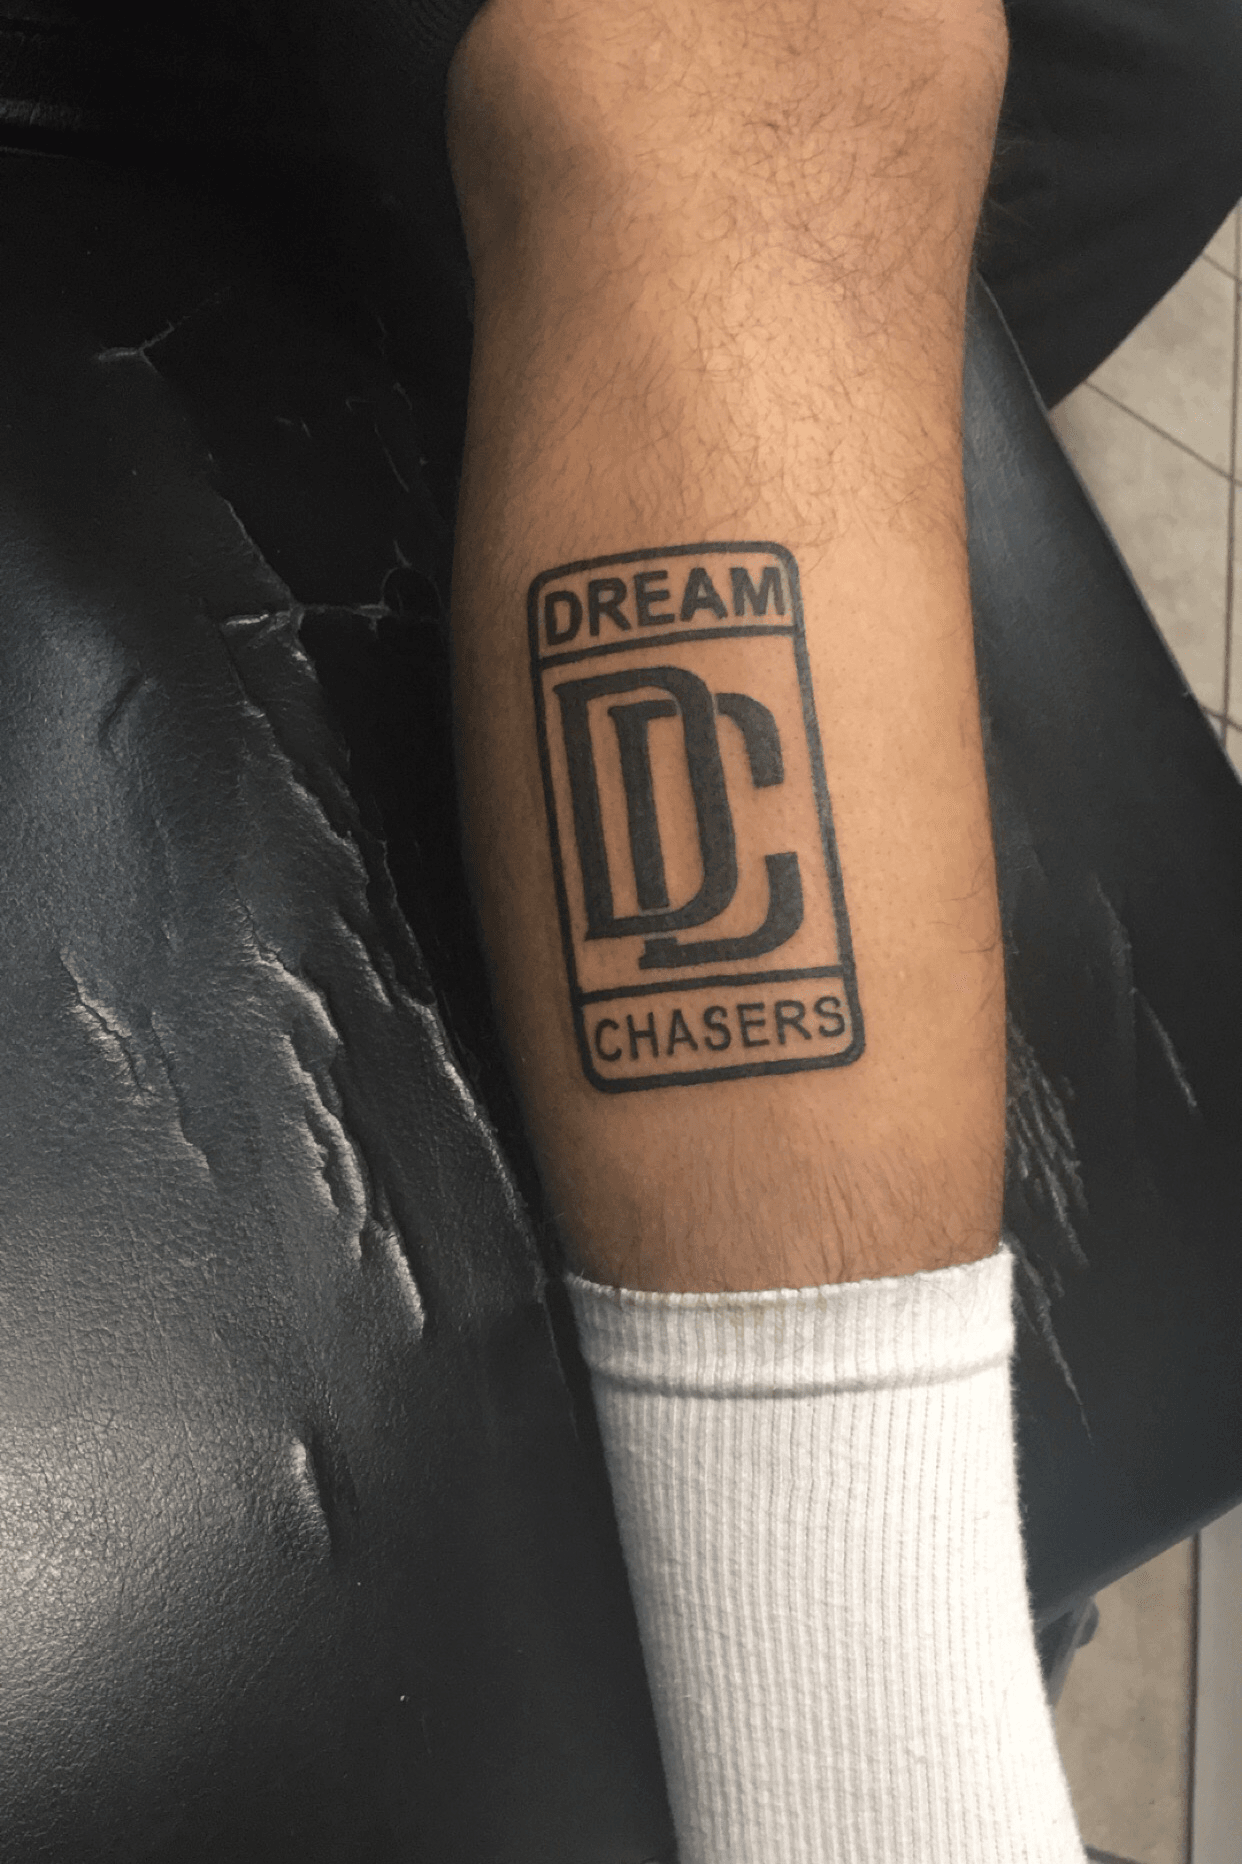 72 Unique Dreamcatcher Tattoos with Images